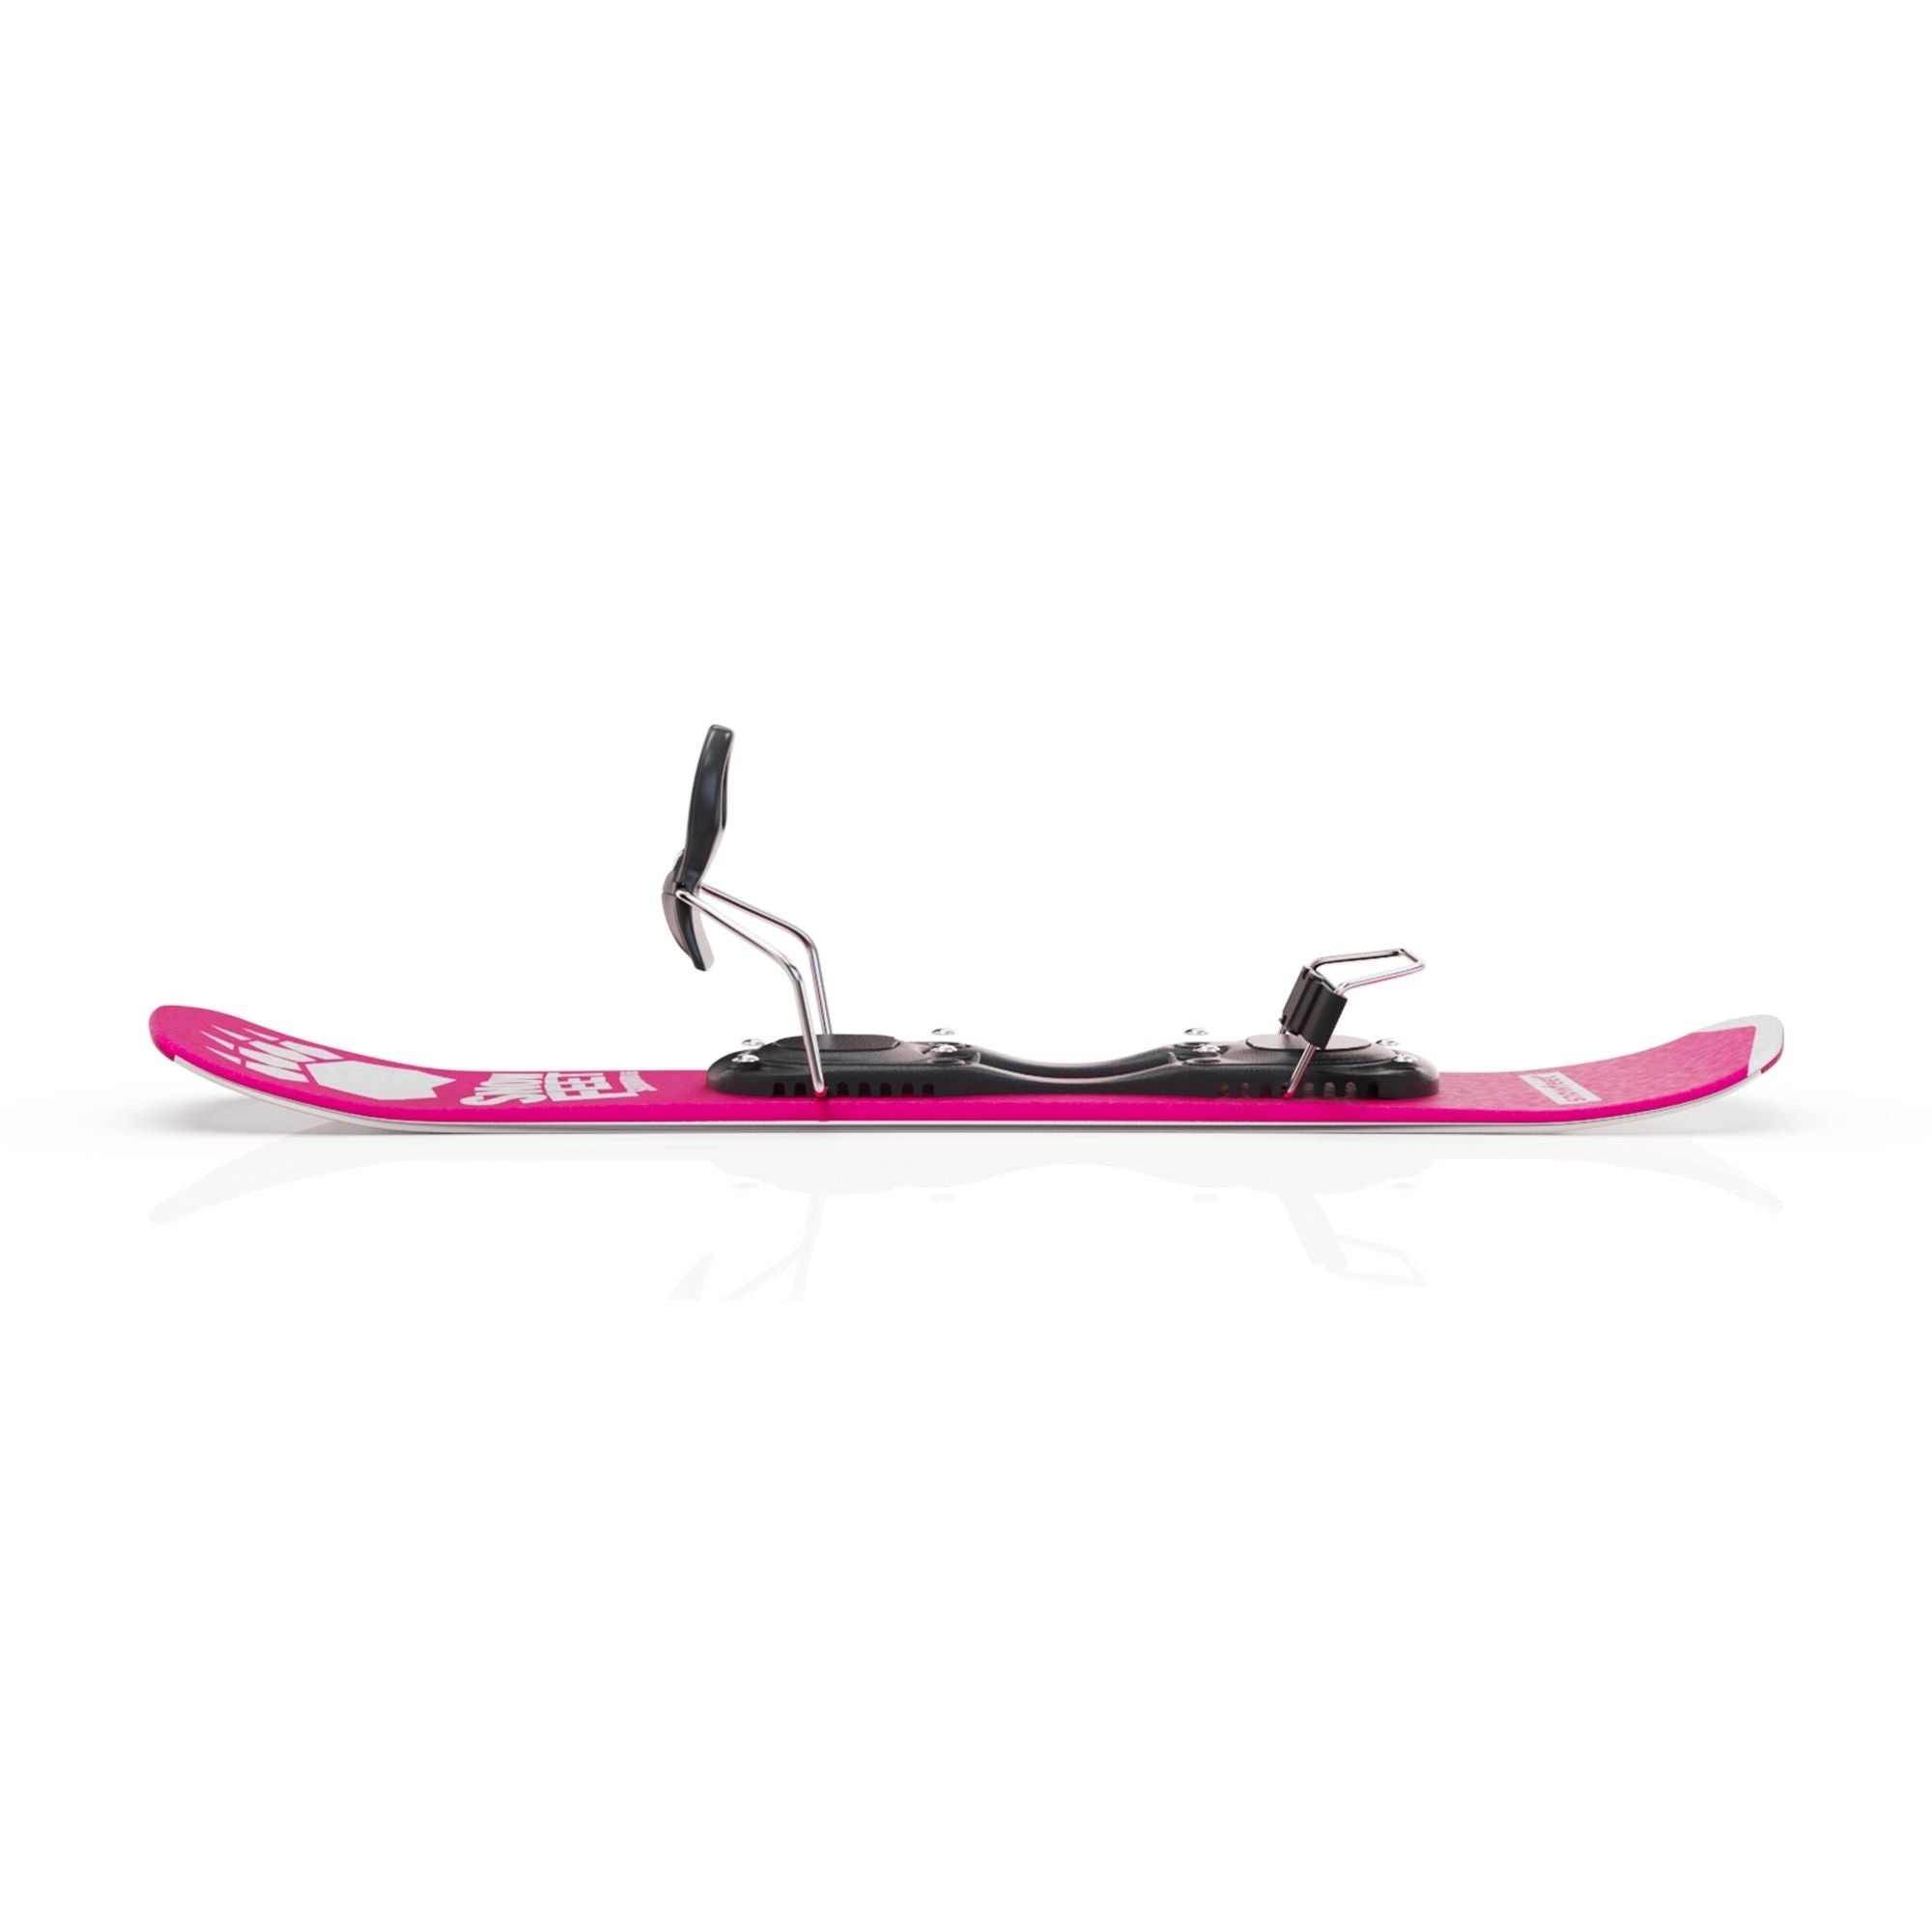 snowfeet-snowblades-for-ski boots-snowboard-boots-black-skiboards-shortski-65cm-pink